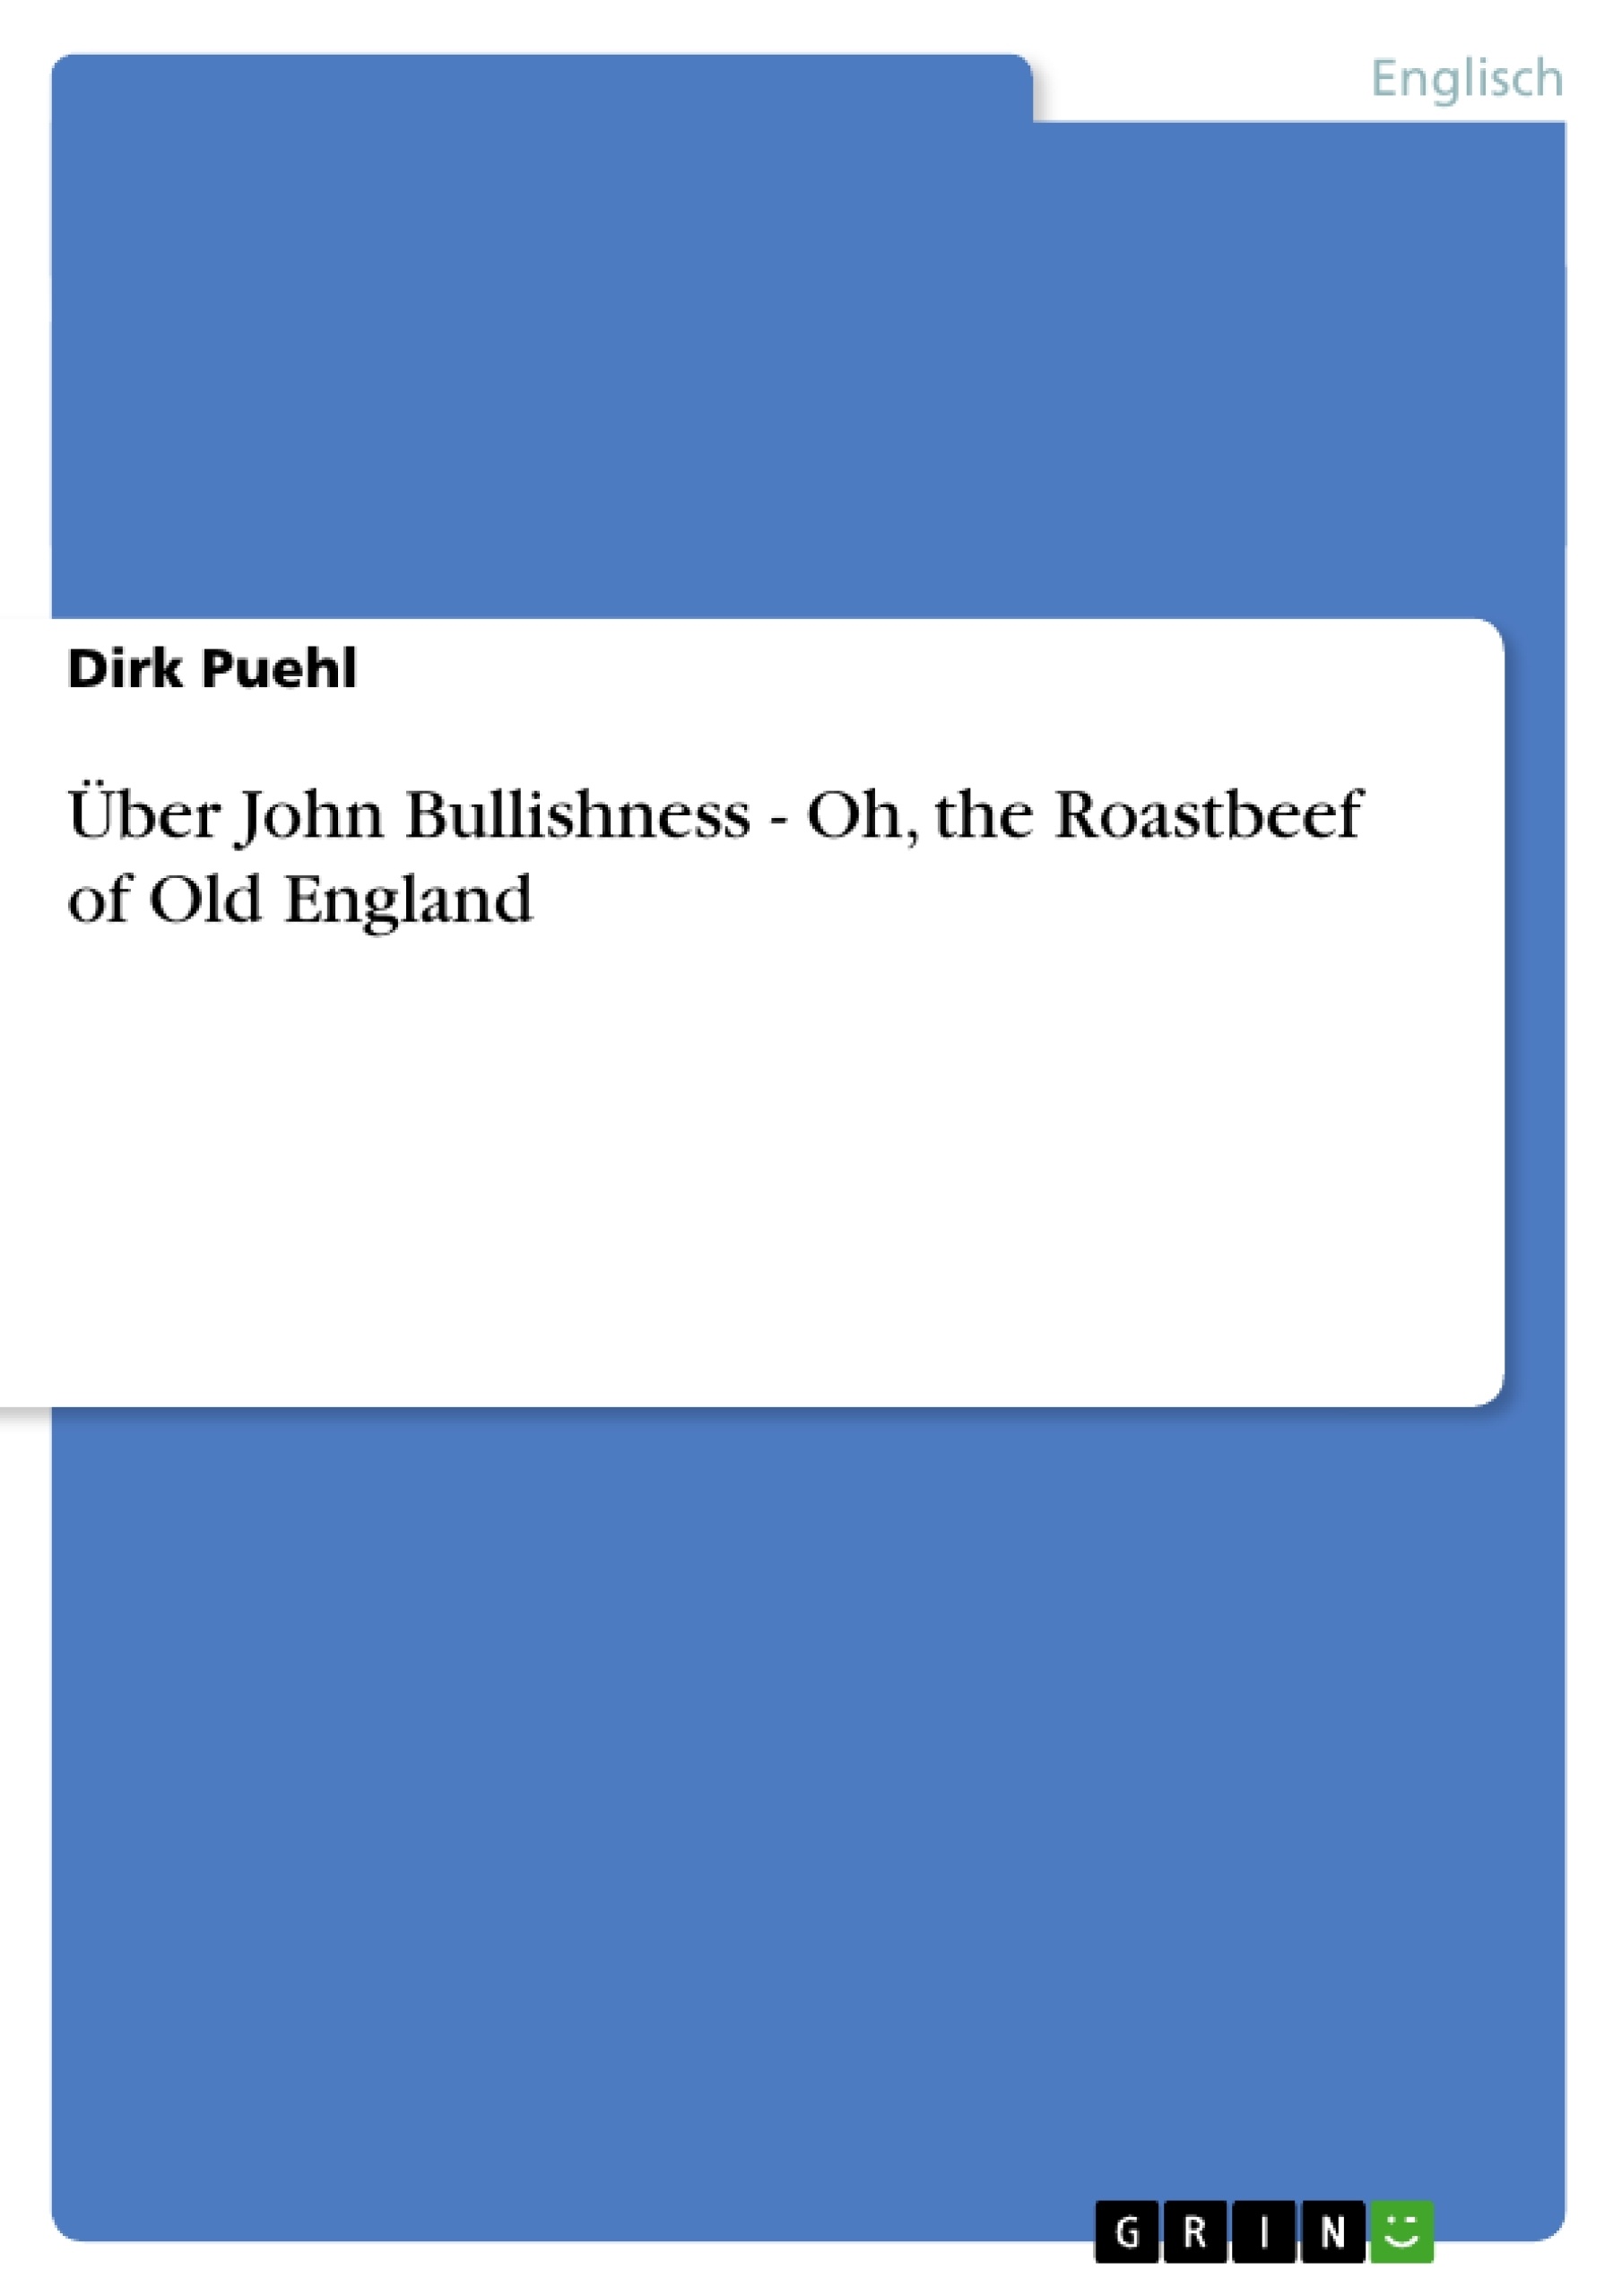 Título: Über John Bullishness - Oh, the Roastbeef of Old England